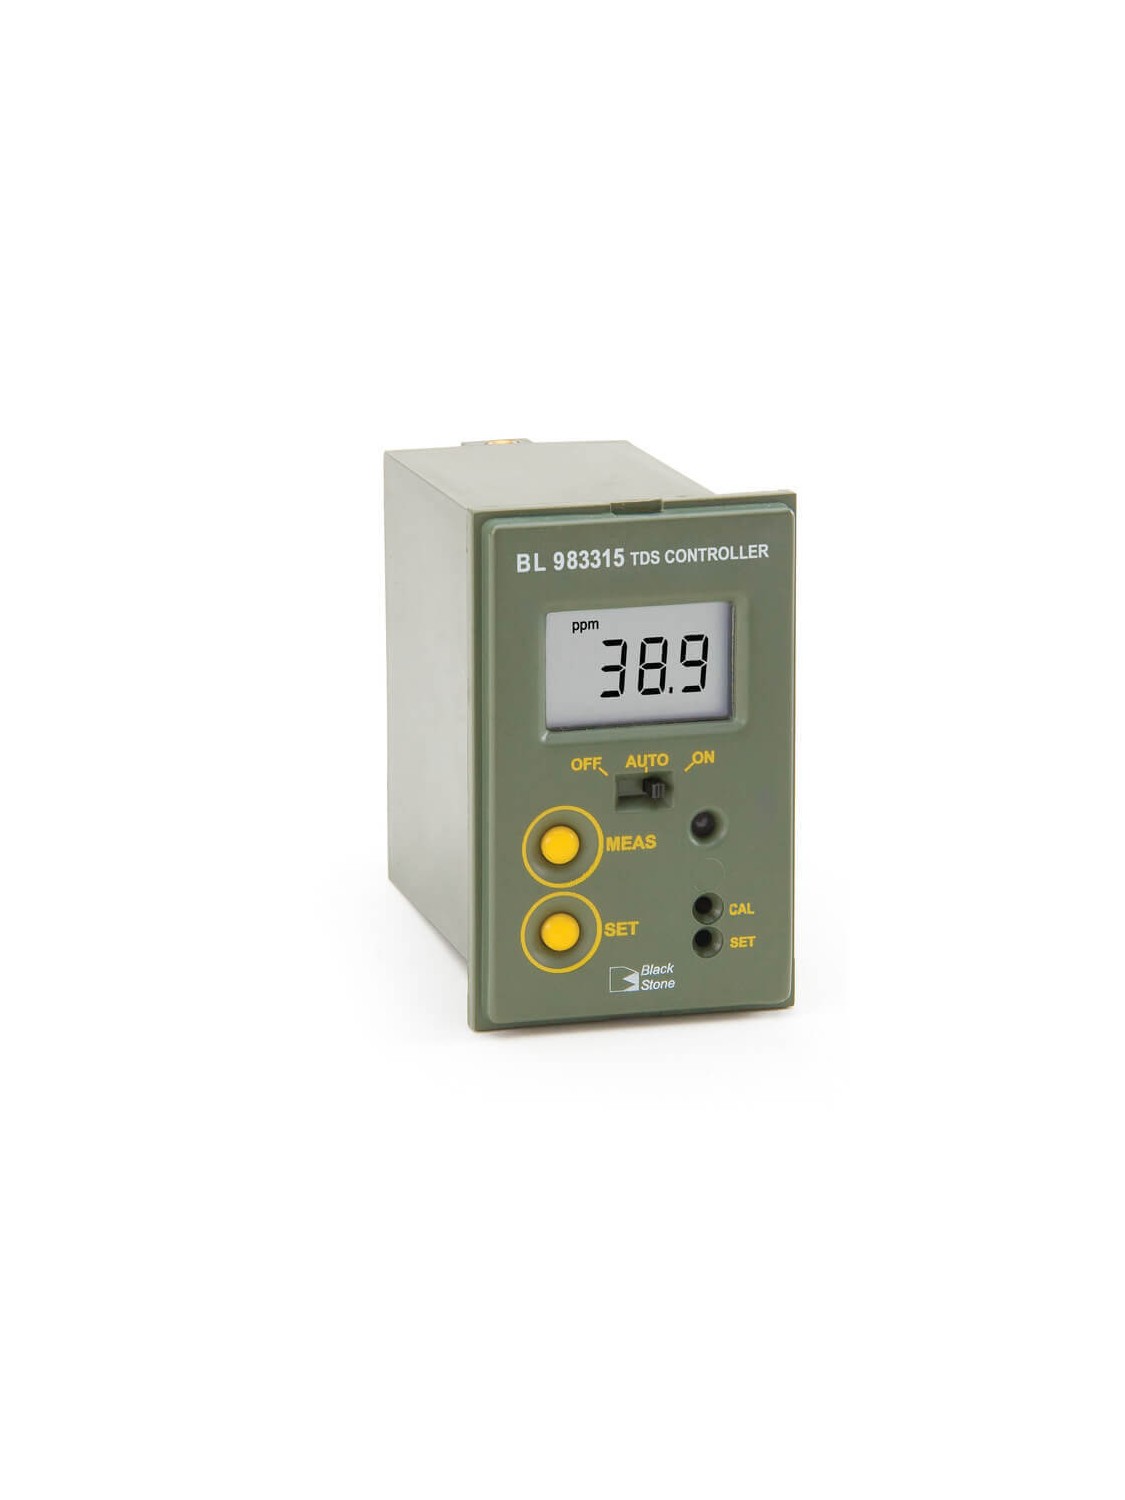 Mini controlador de sólidos totales disueltos (0.0 a 199.9 ppm) 115V/230V - BL983315-1 - HANNA PERÚ